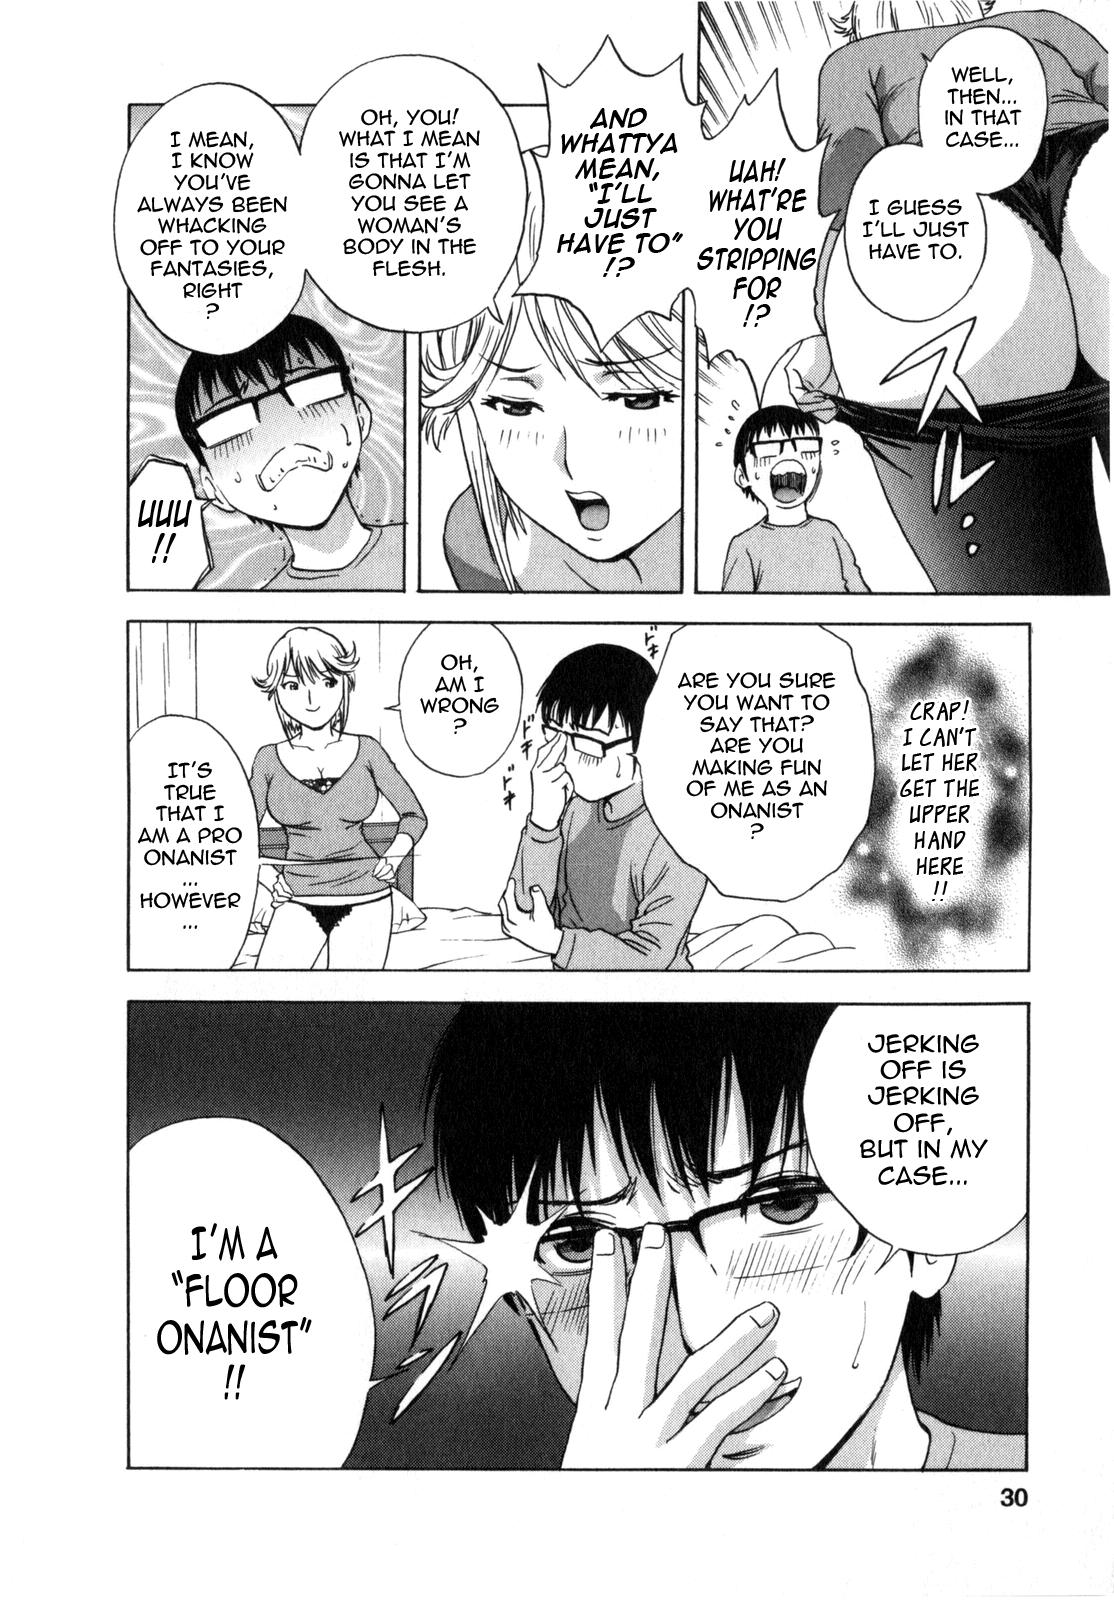 [Hidemaru] Life with Married Women Just Like a Manga 1 - Ch. 1-9 [English] {Tadanohito} 31